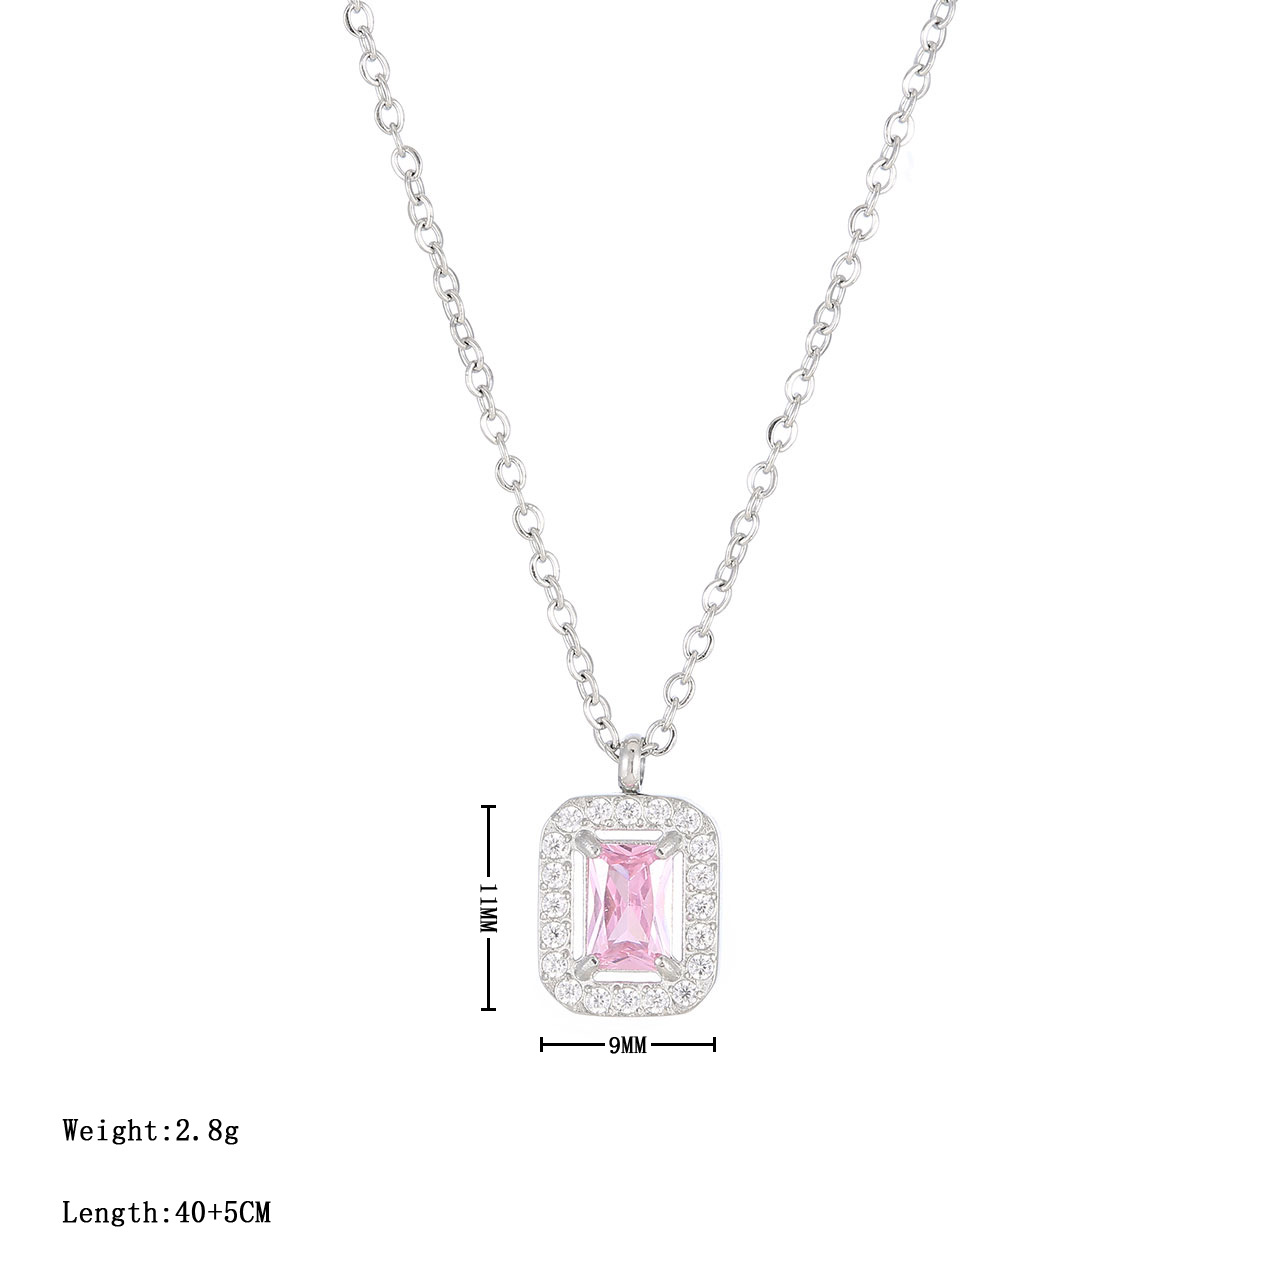 4:Platinum colour - pink zircon